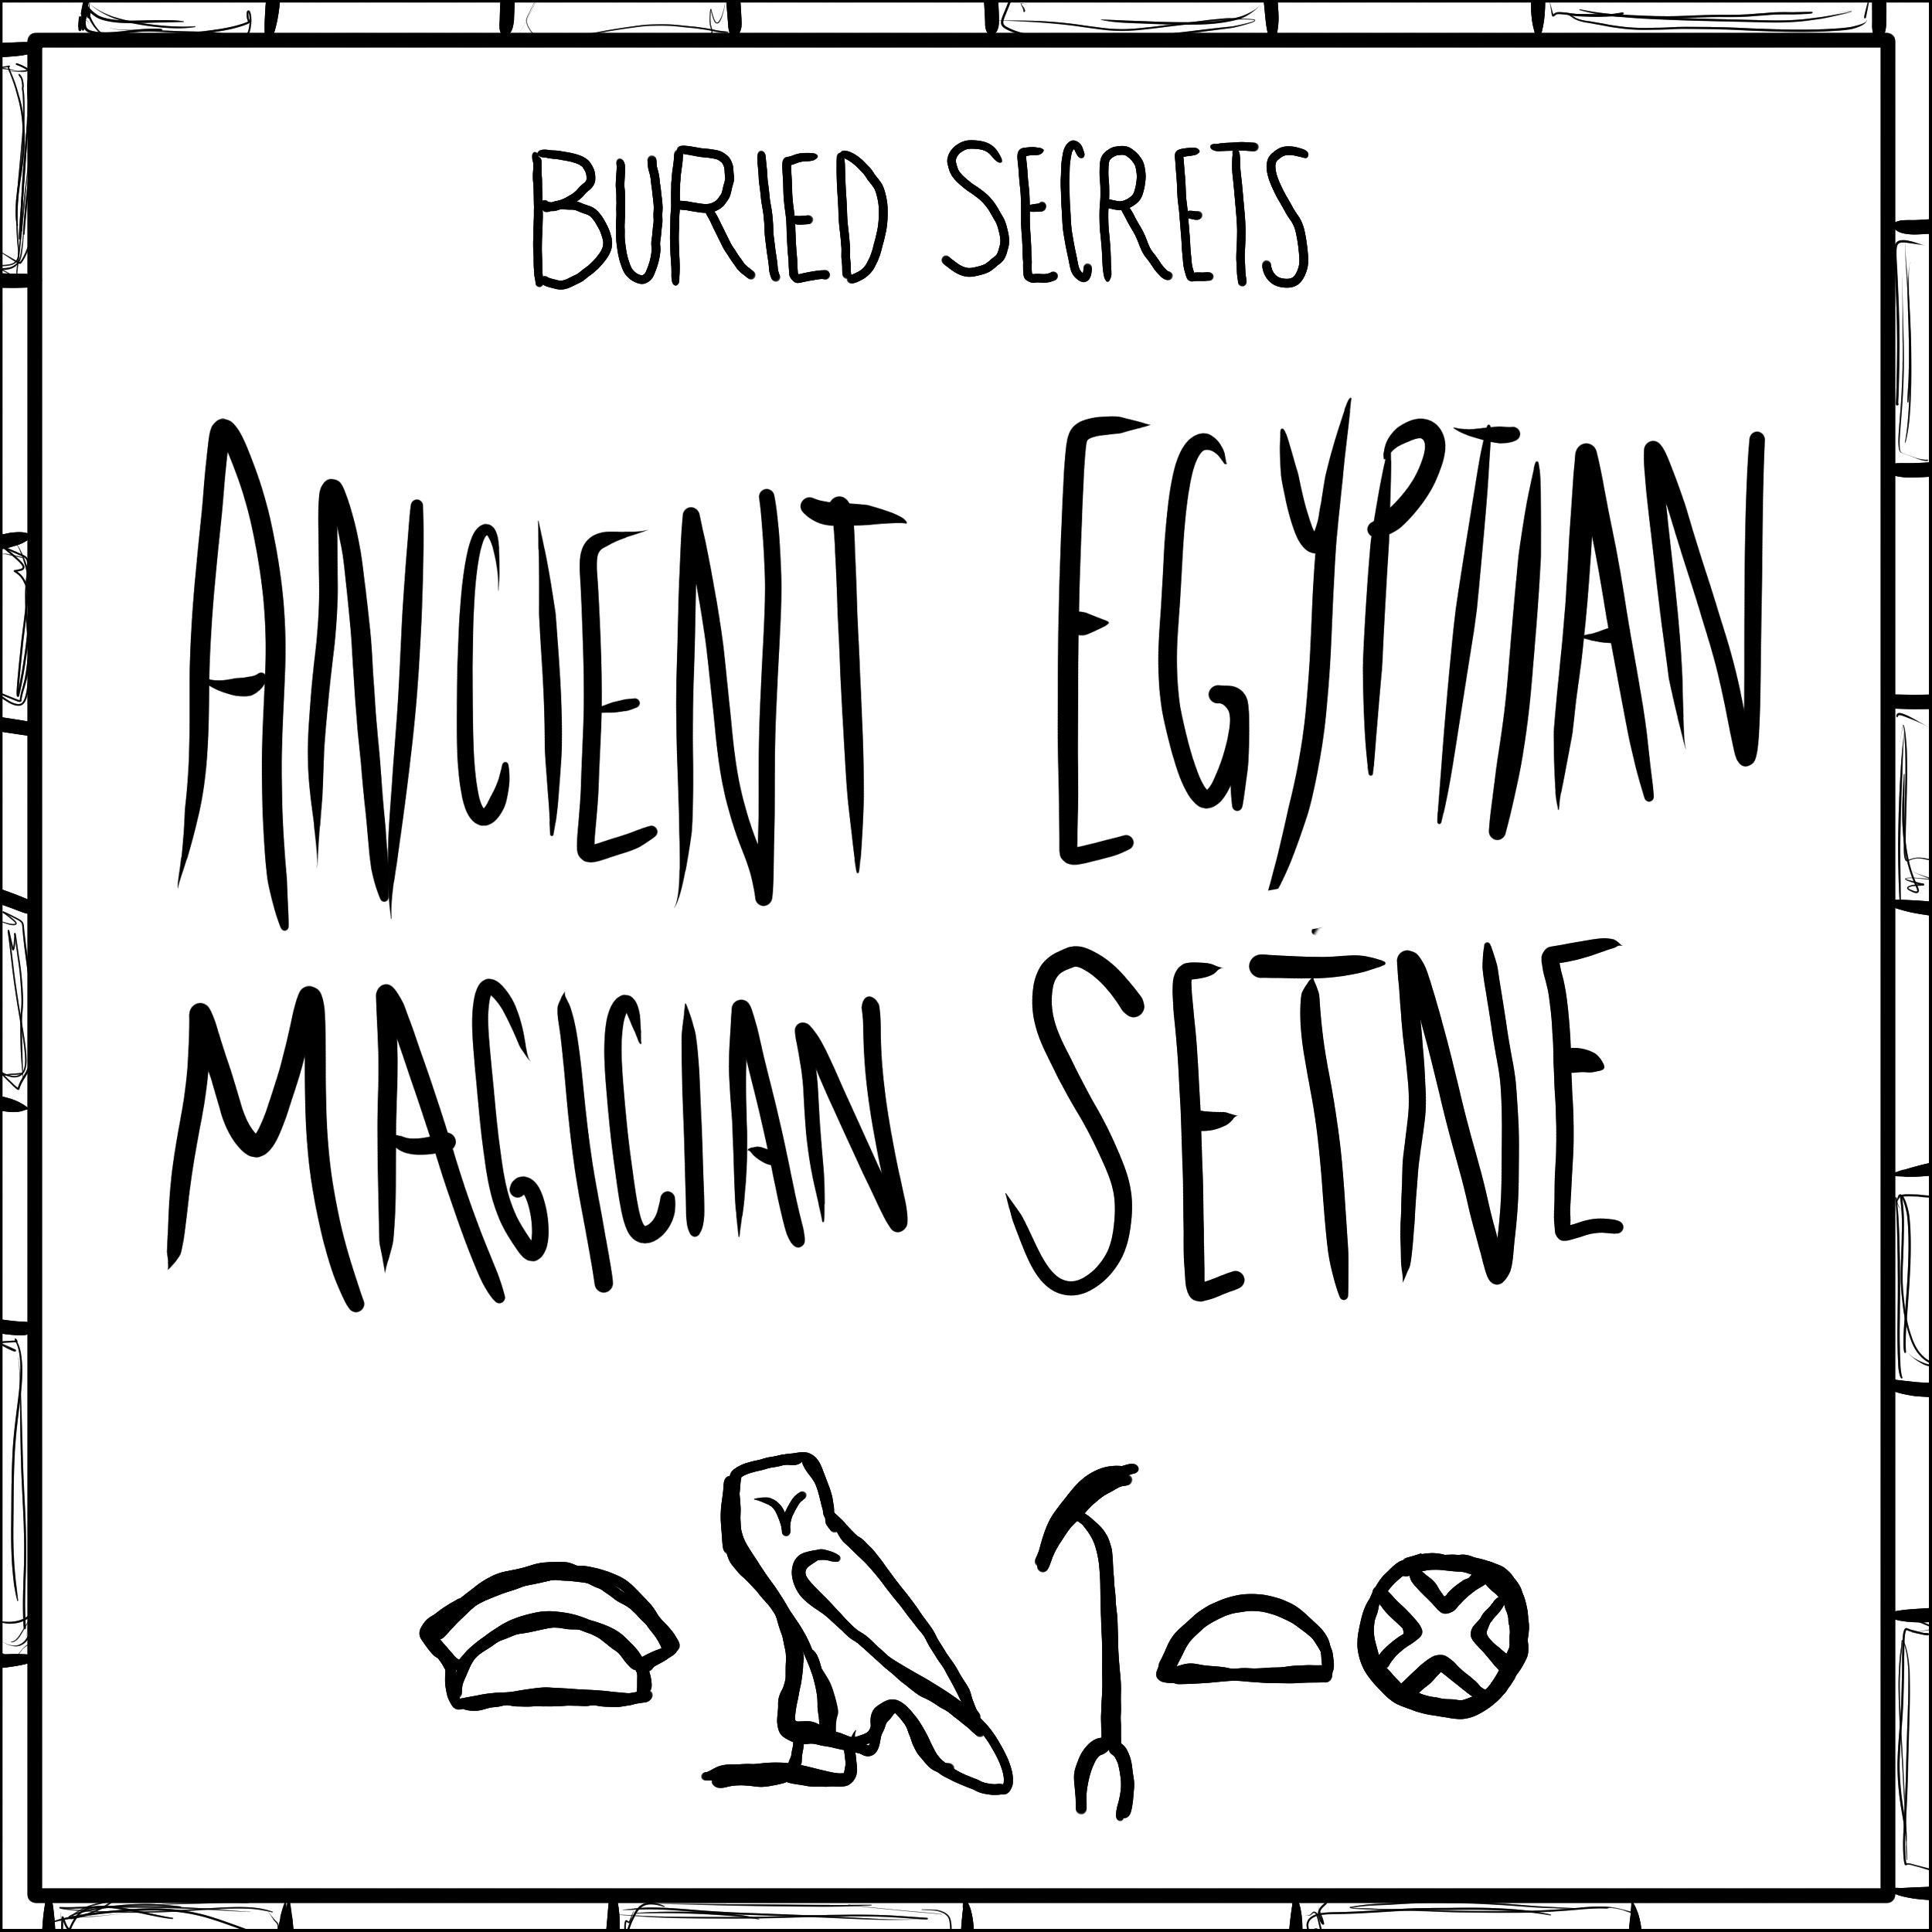 Ancient Egyptian Tomb Raider and Wizard Setne